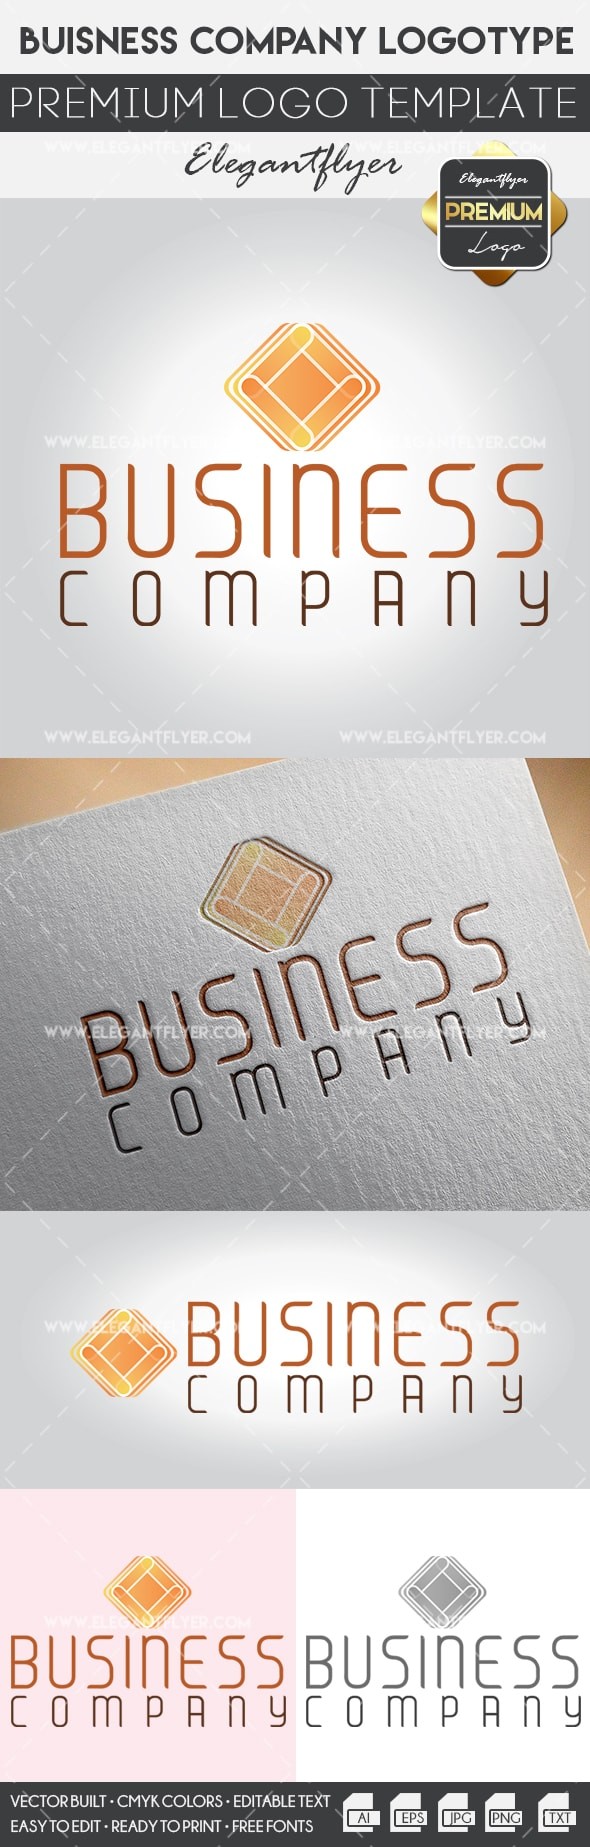 Business Company by ElegantFlyer